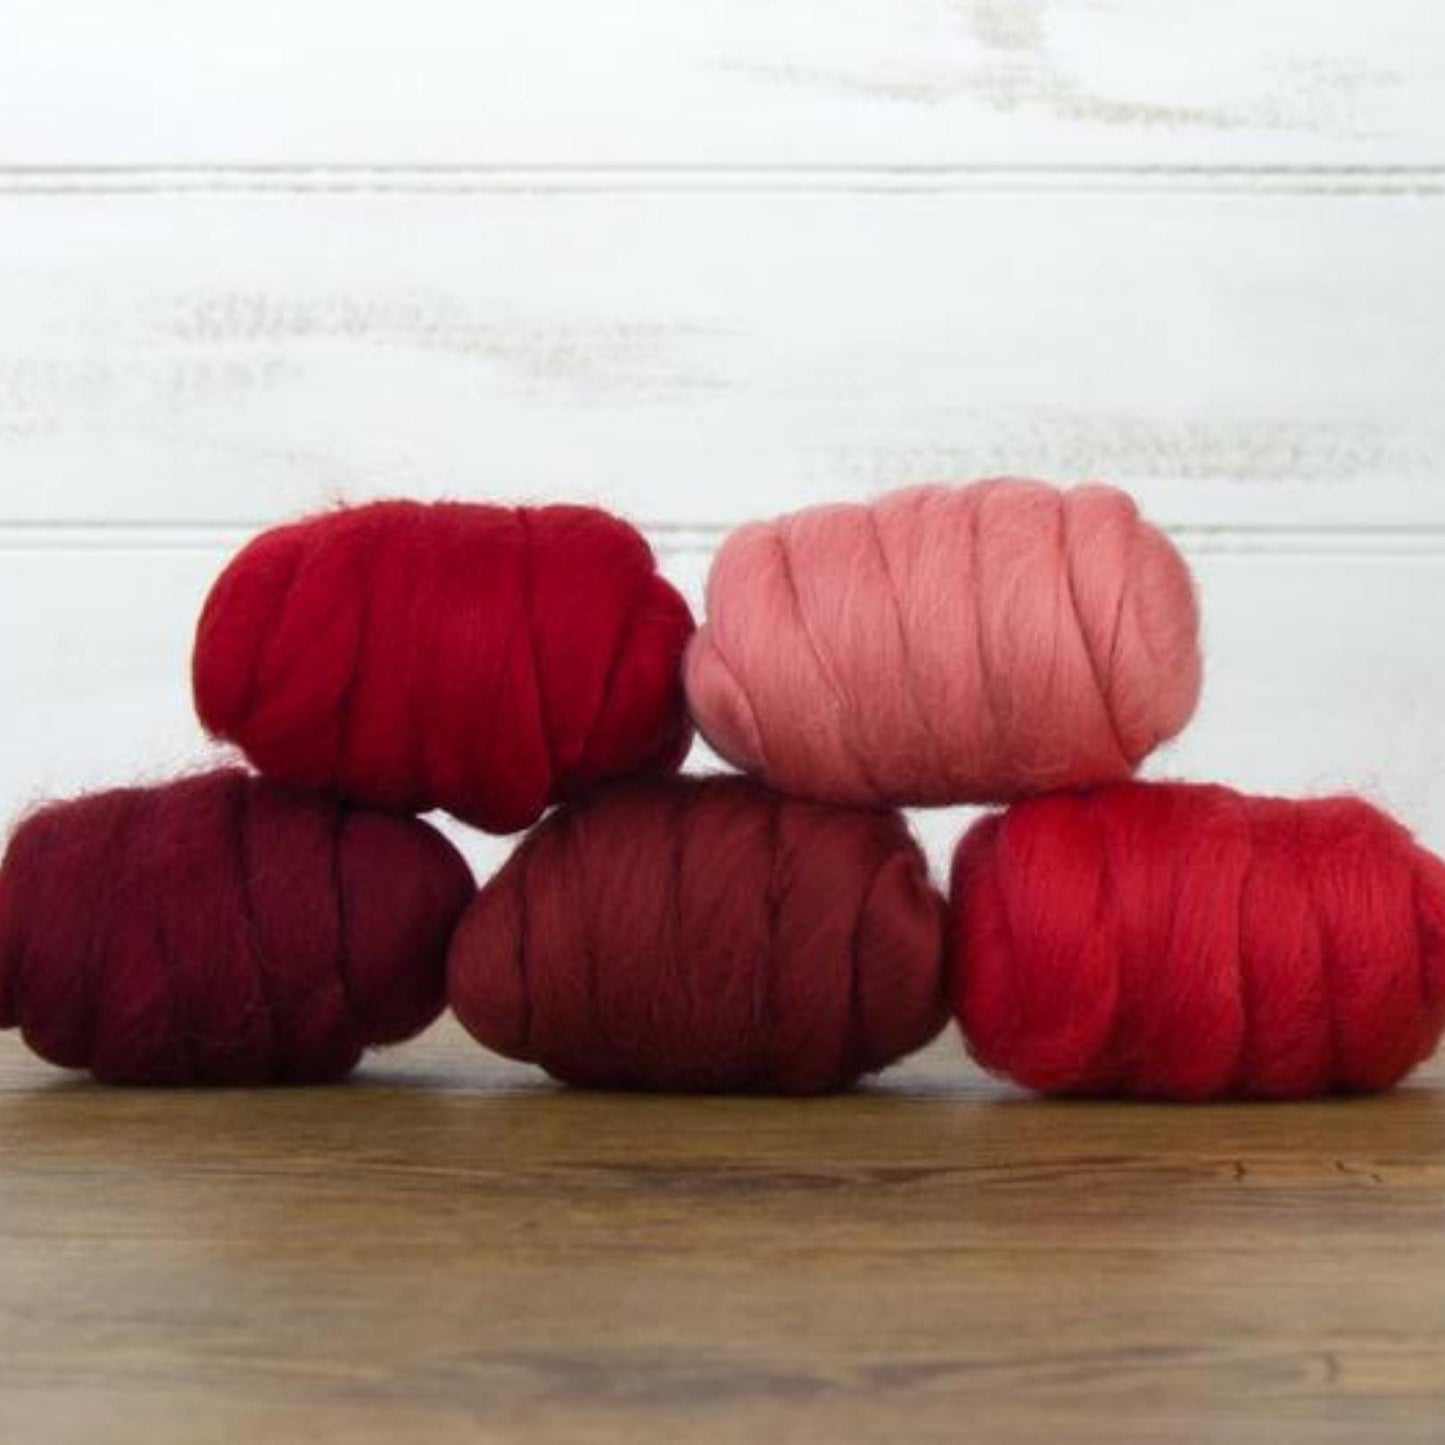 Mixed Merino Wool Variety Pack | Wondrous Reds (Reds) 250 Grams, 23 Micron